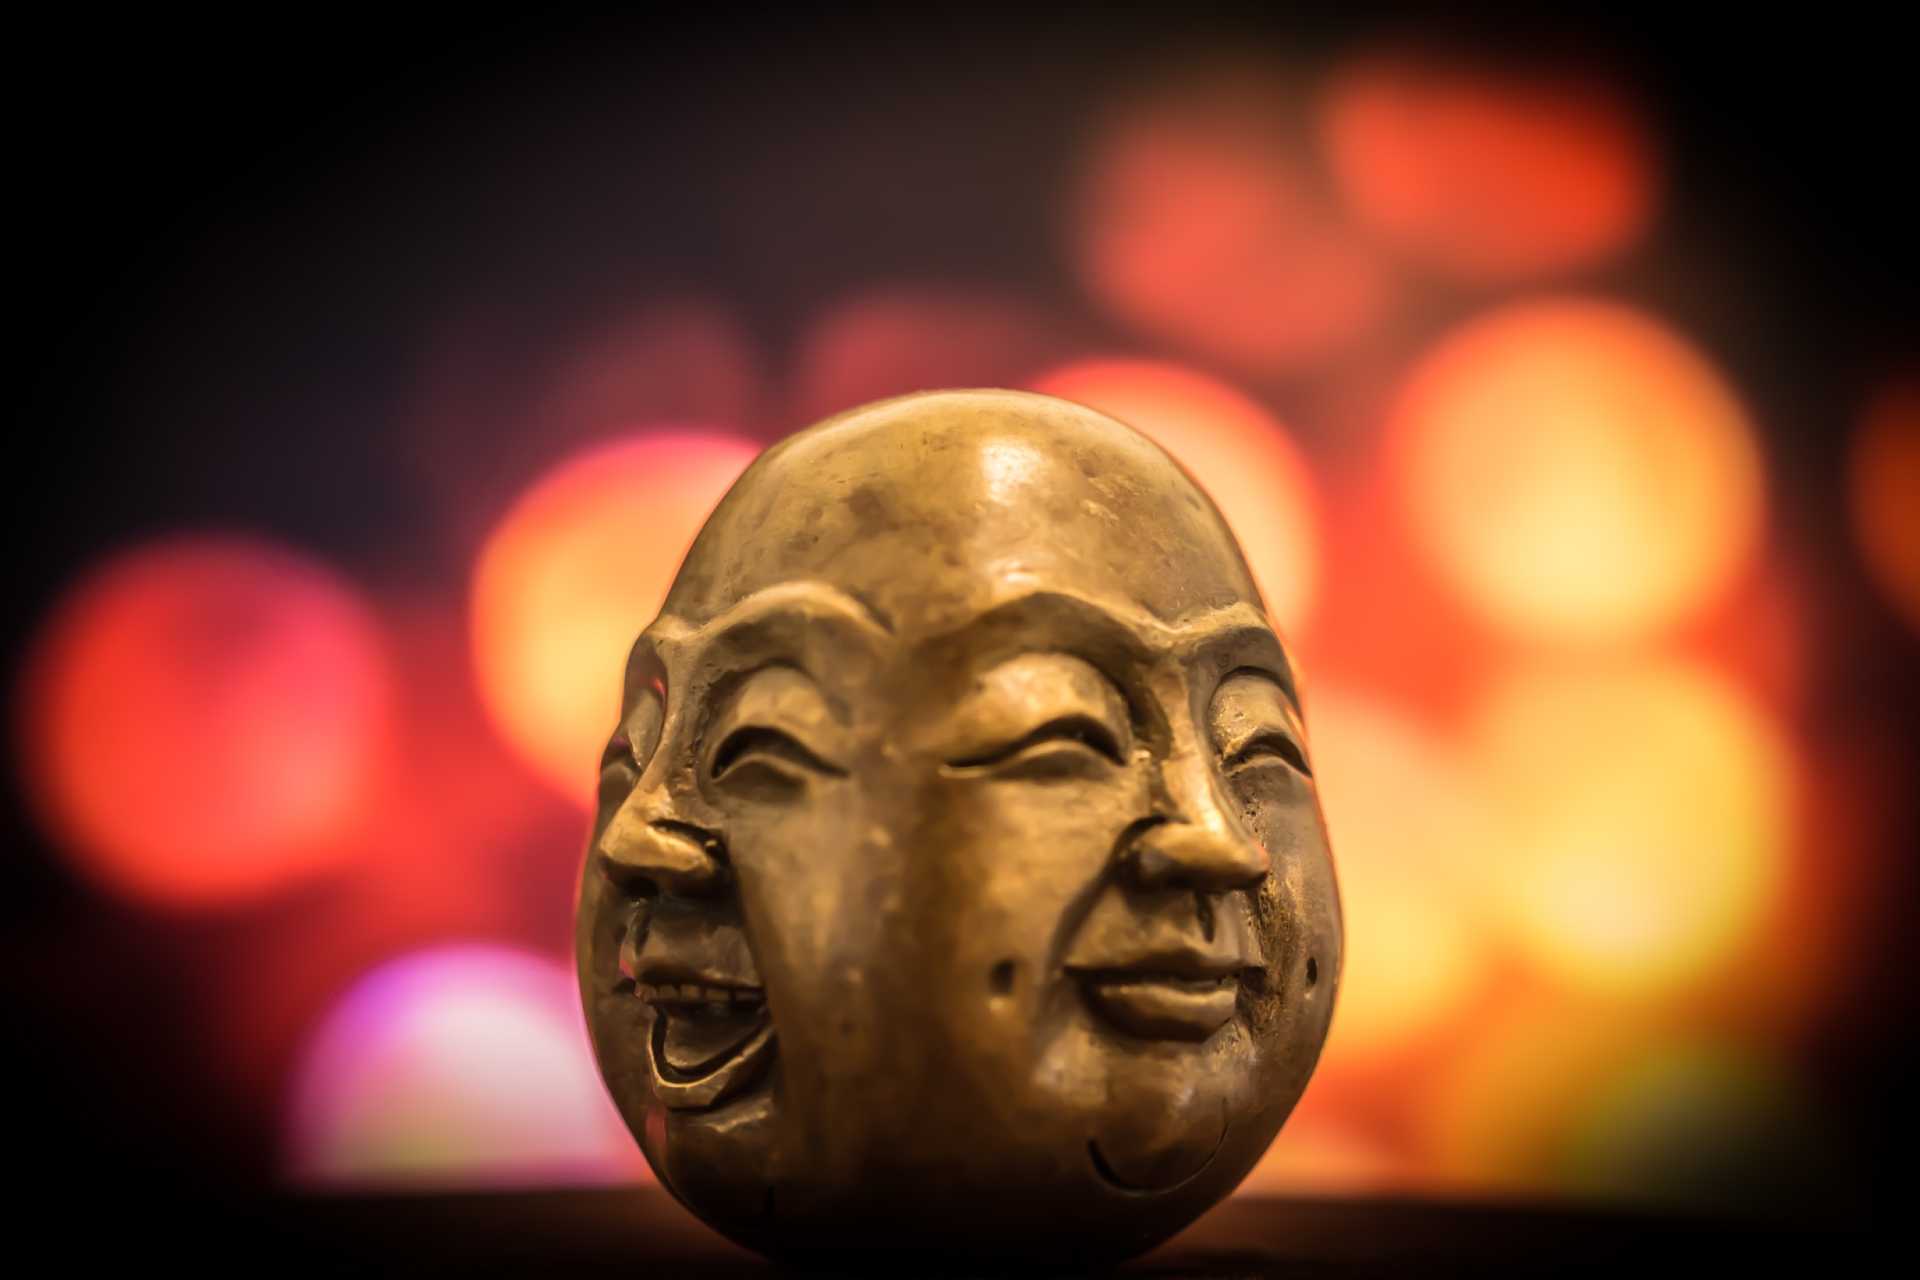 estatua dorada cabeza calvo expresion gestion emcional feliz serio